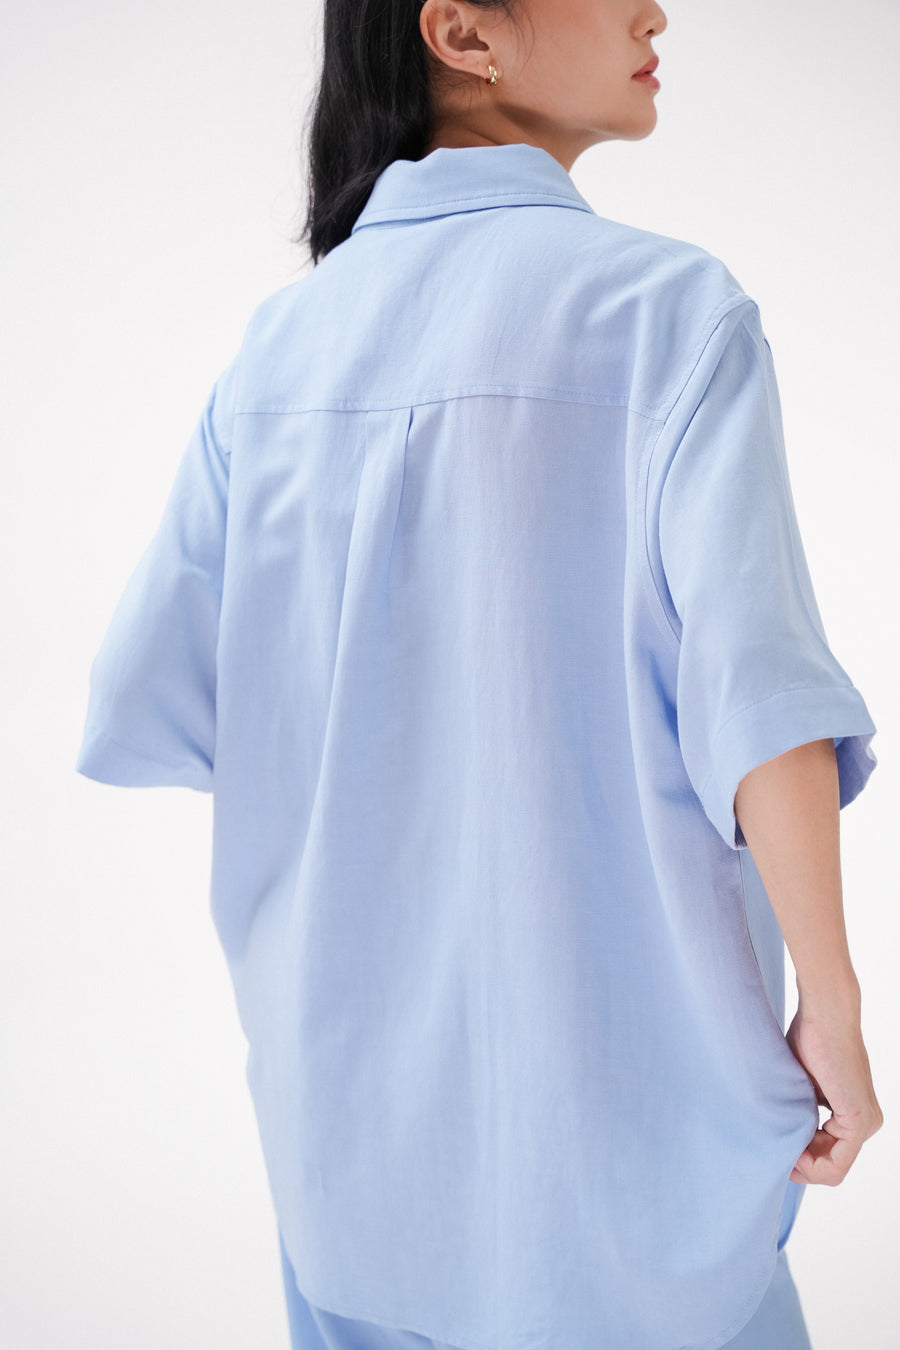 Editor Short Sleeve Shirt in Baby Blue